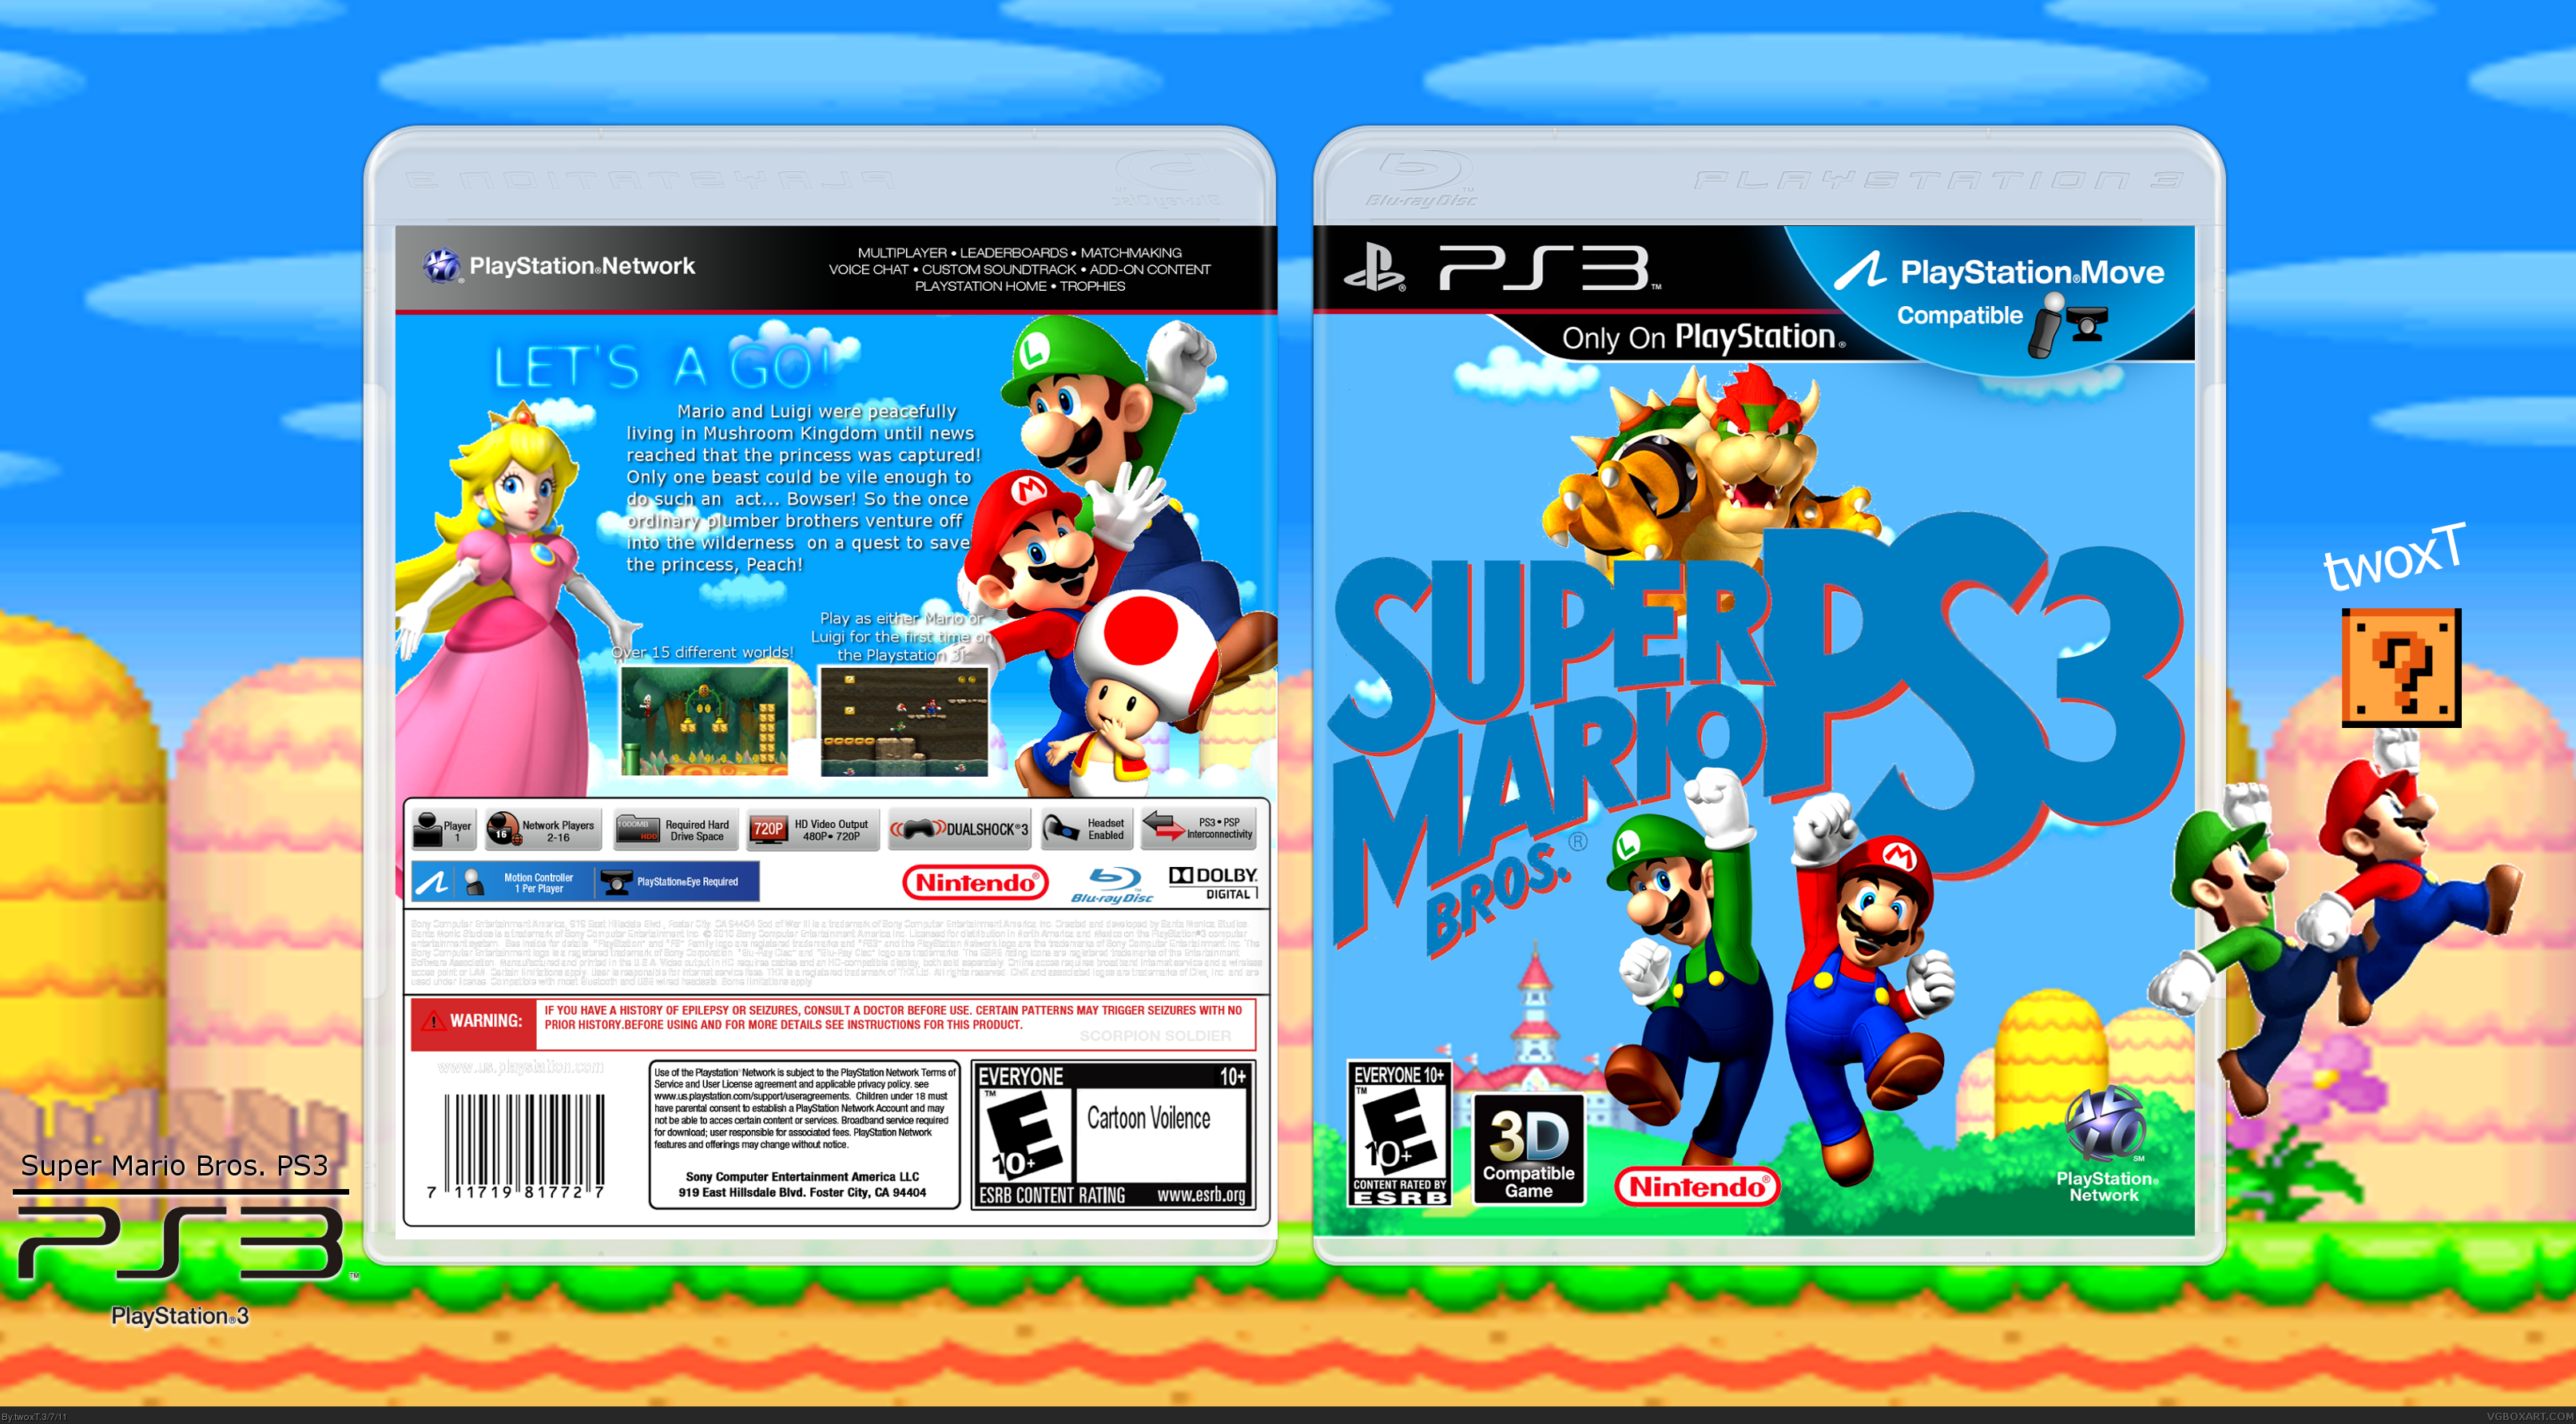 Super Mario Bros. PS3 box cover